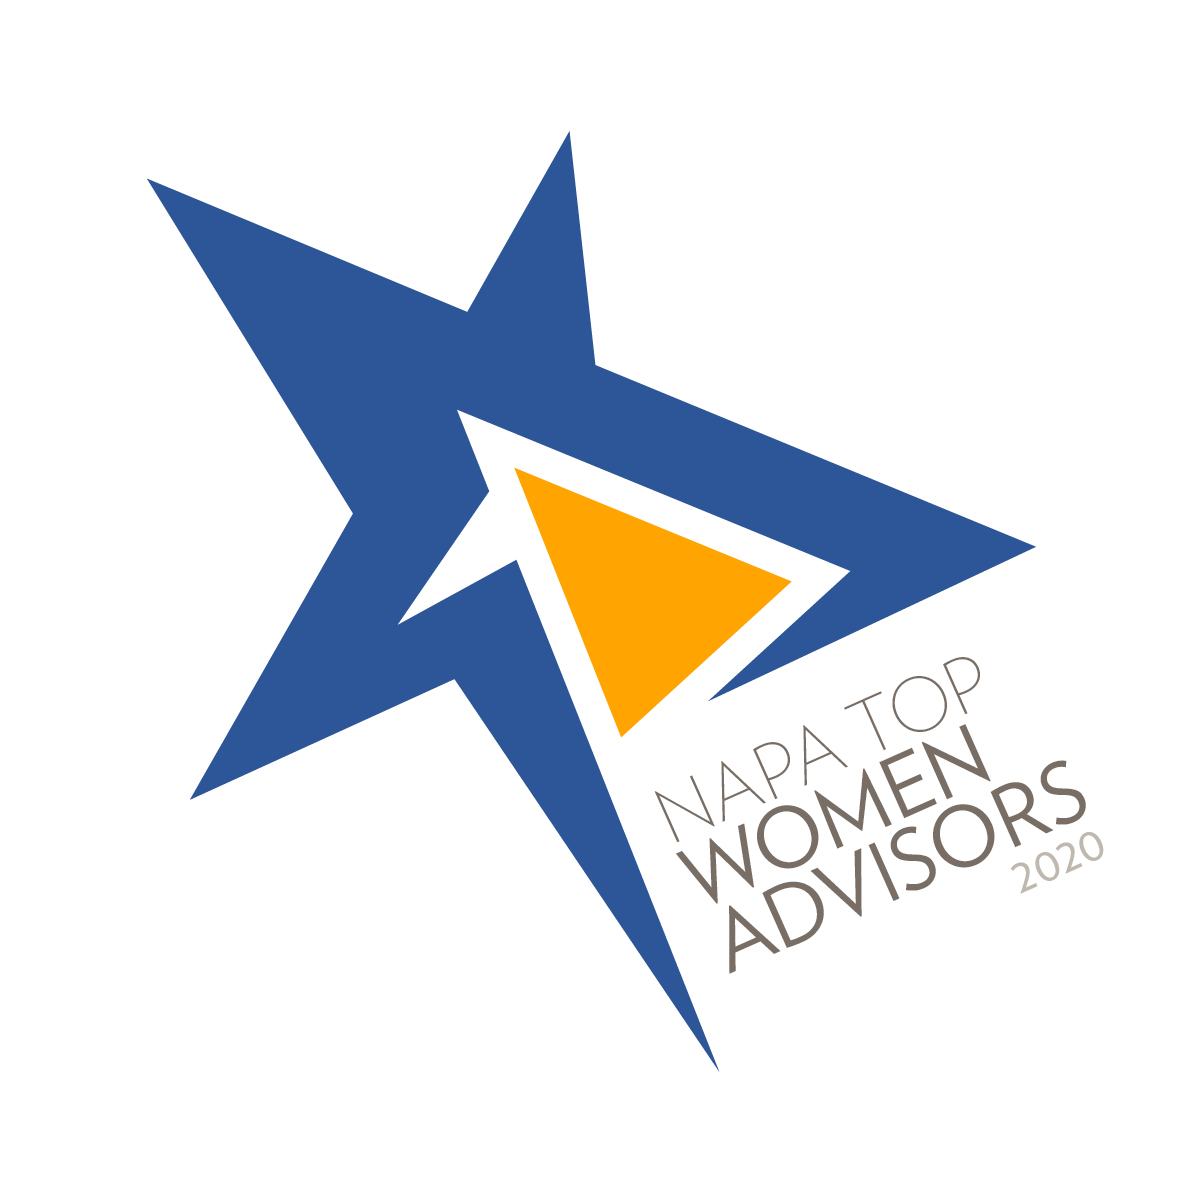 NAPA Top Women Advisors